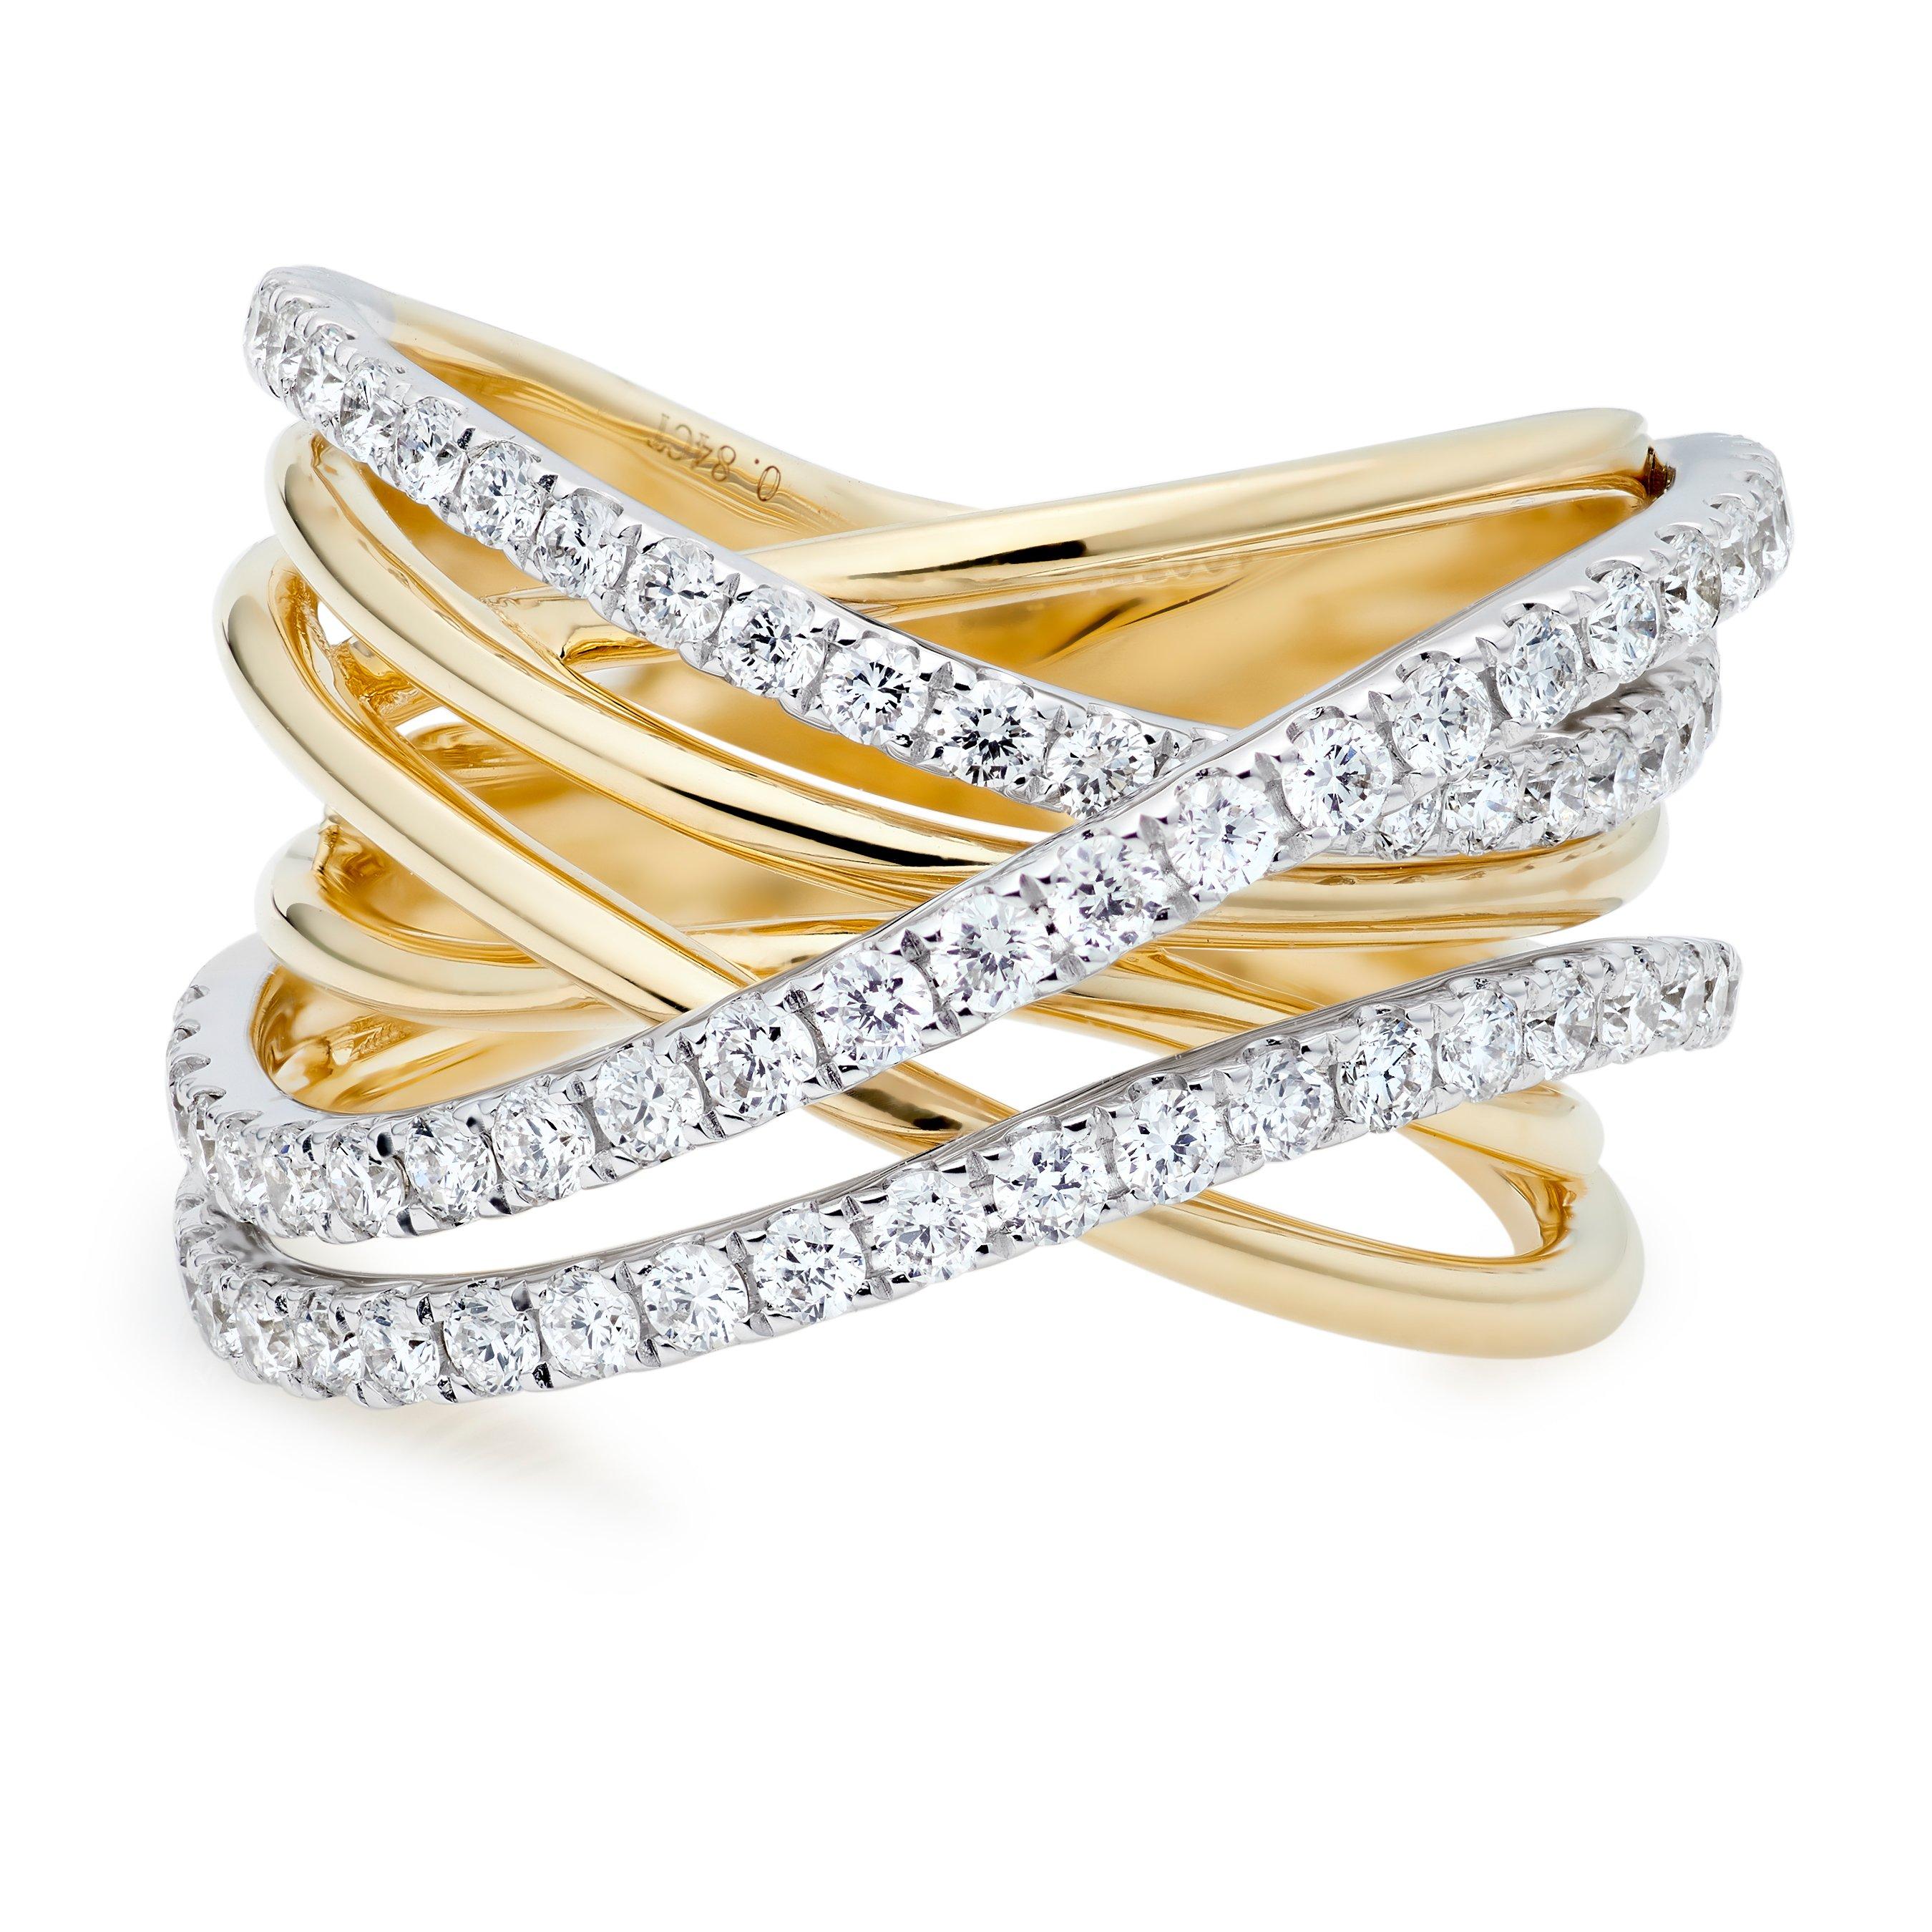 18ct Yellow Gold Diamond Ring | 0132113 | Beaverbrooks the Jewellers